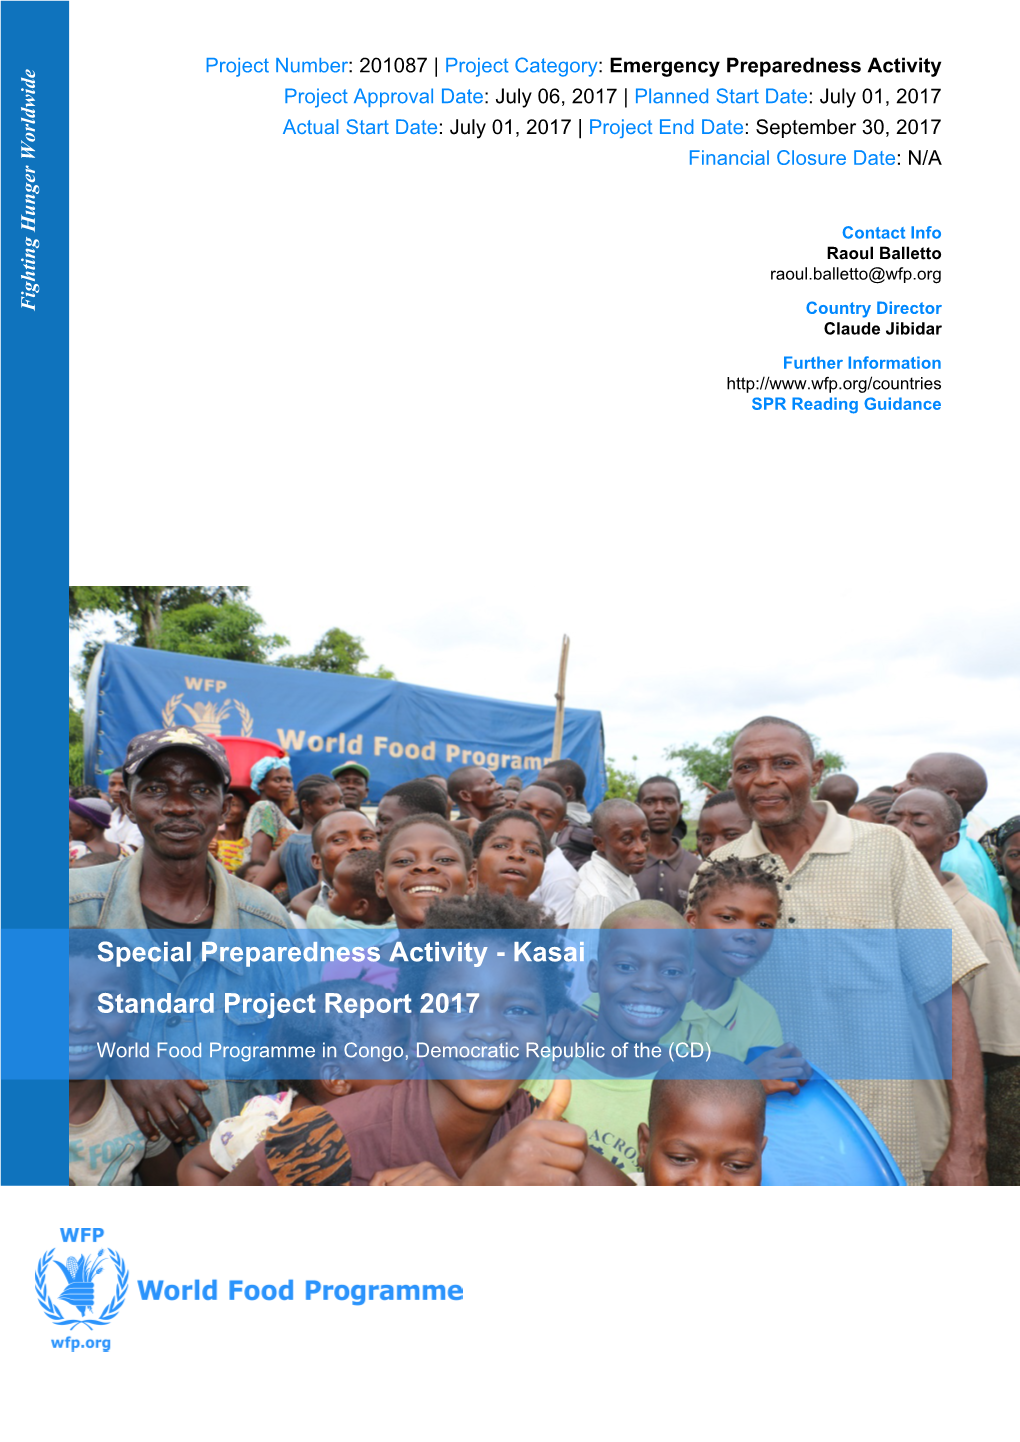 Kasai Standard Project Report 2017